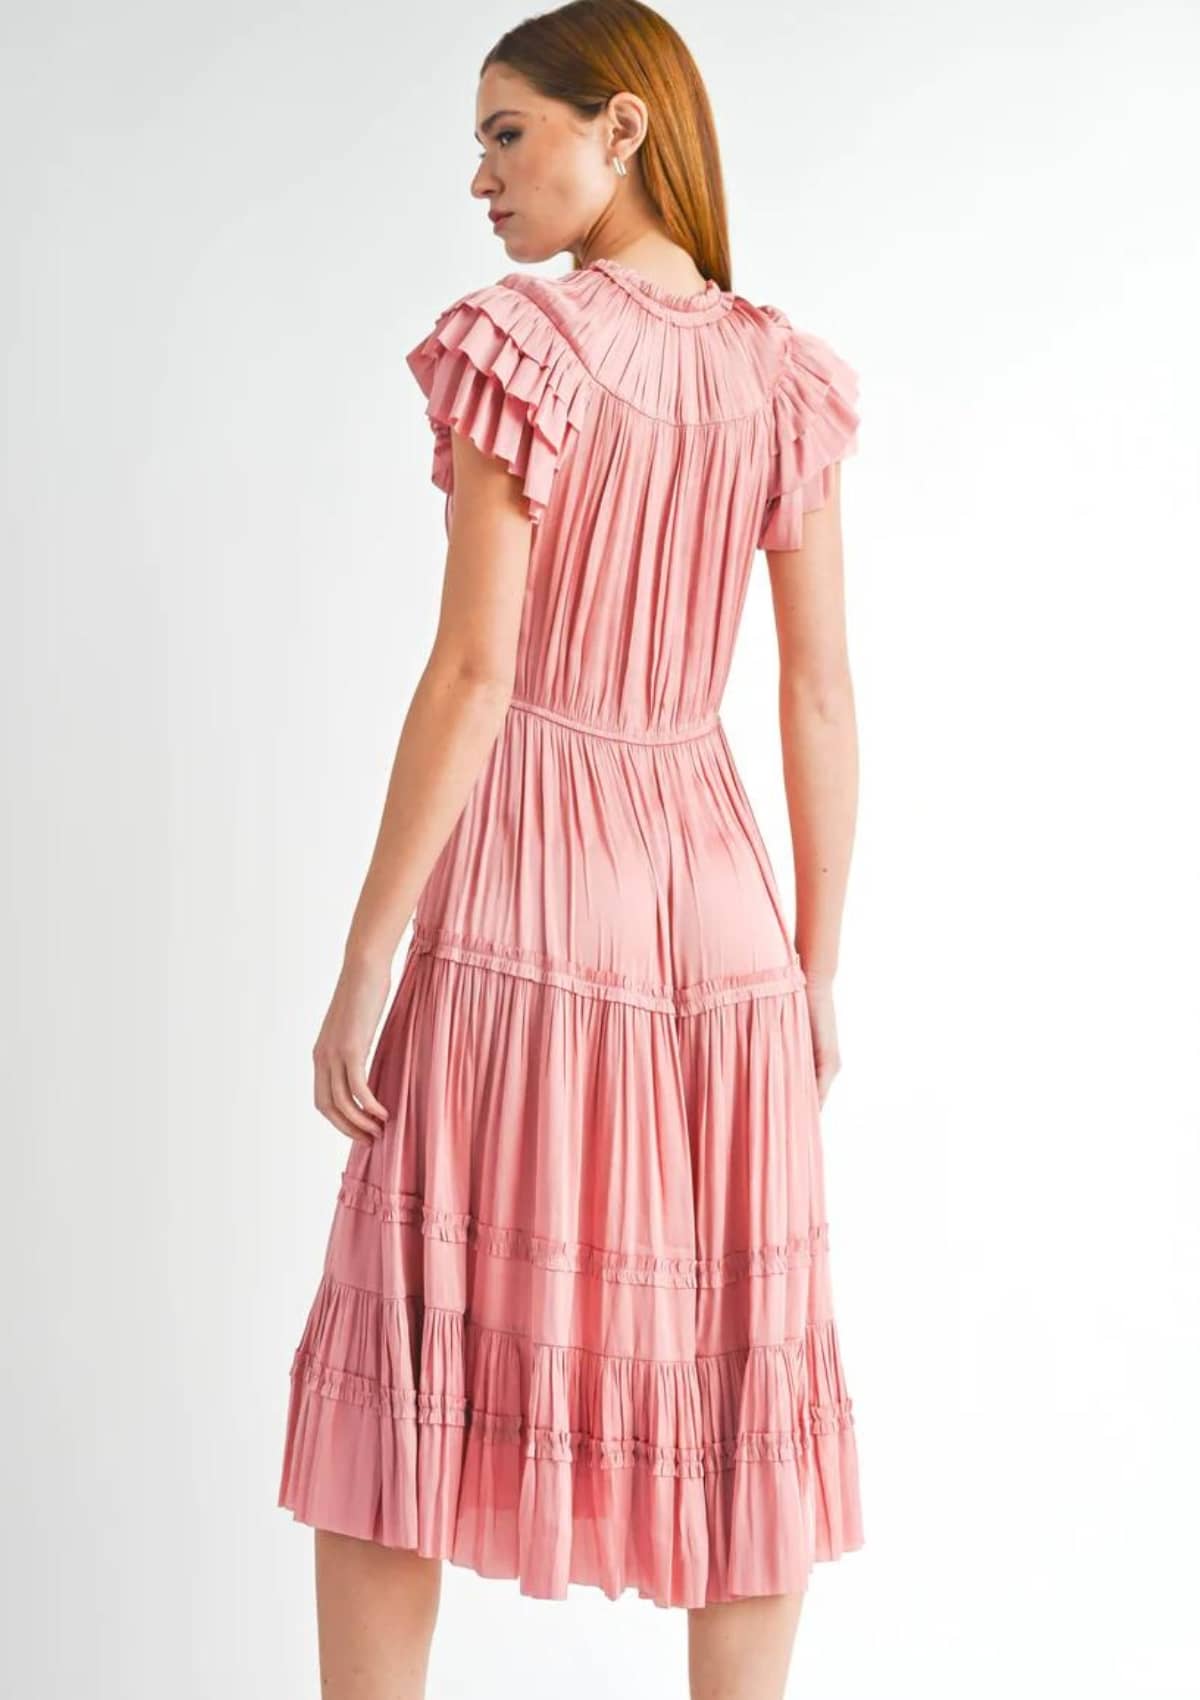 Clothing-Dresses-Fashion-Ruby Jane.